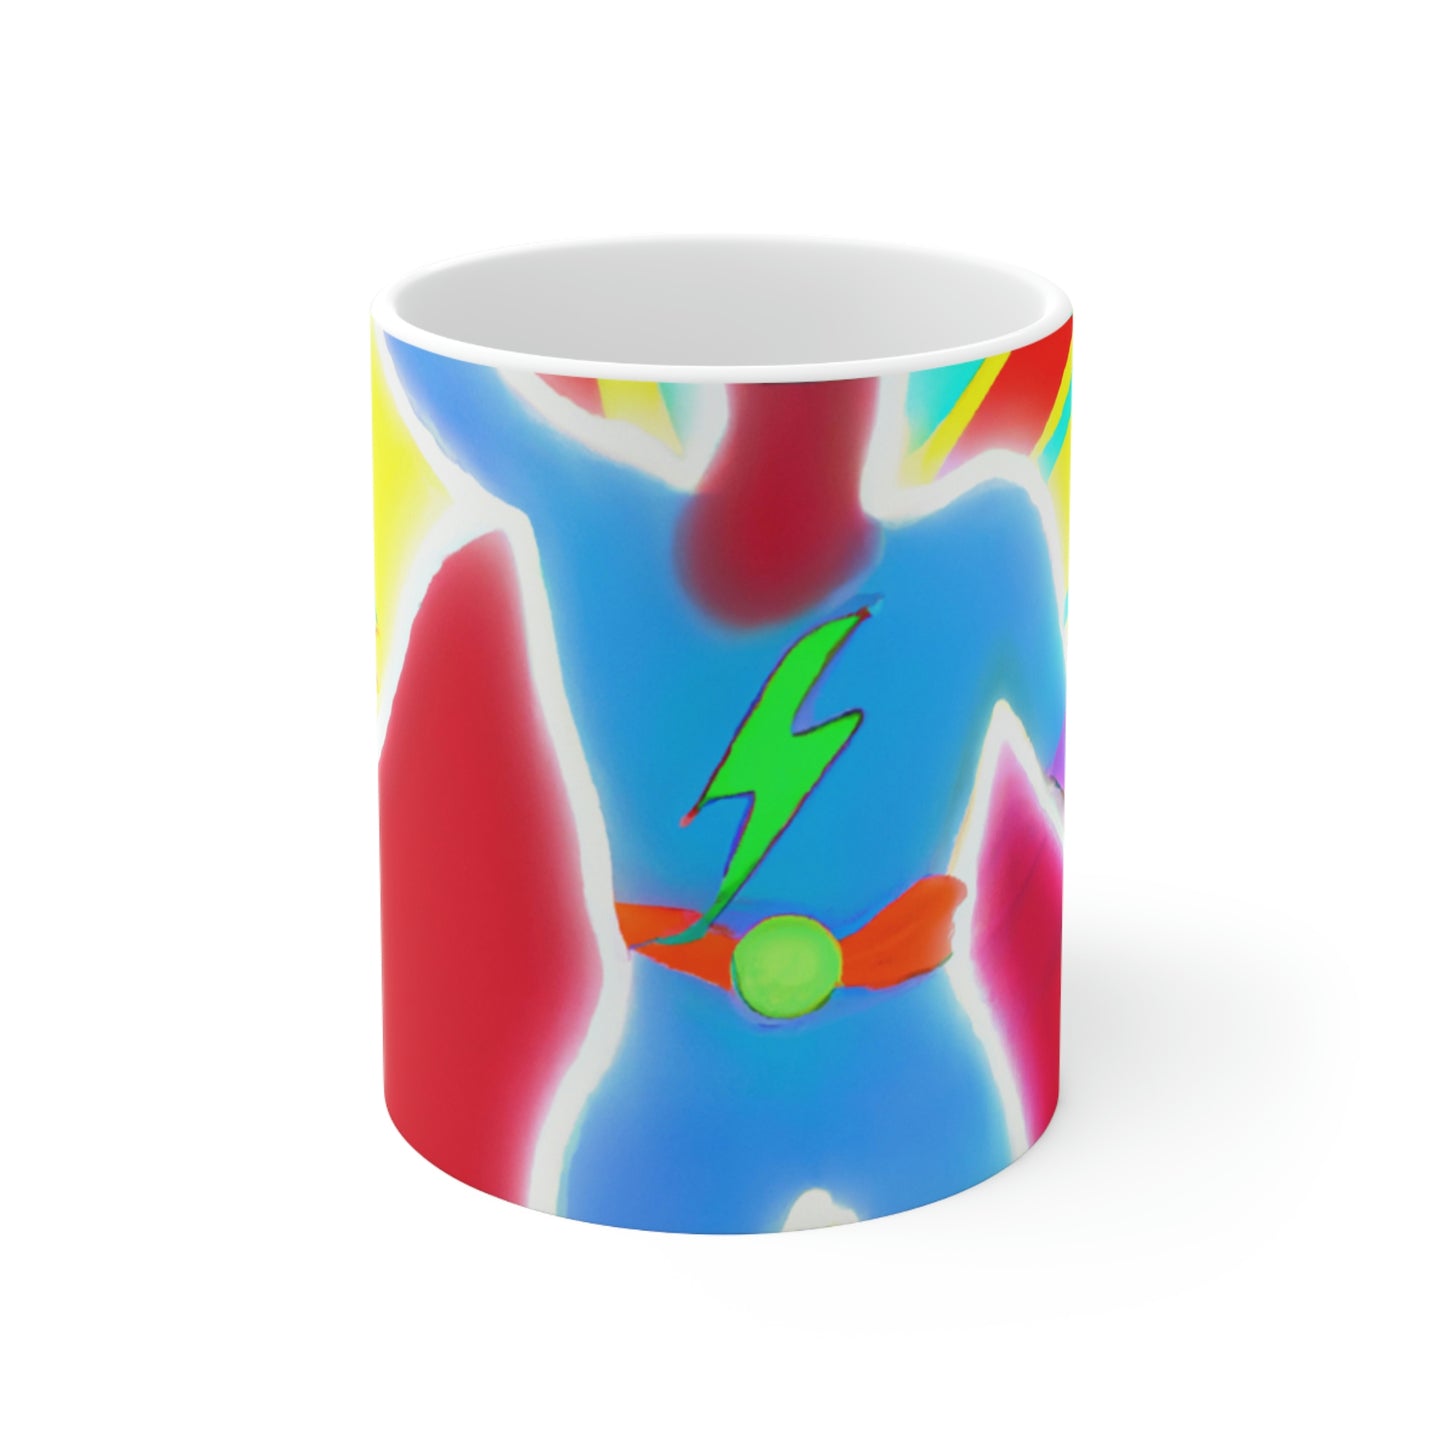 "The Vibrant Superhero" - The Alien Ceramic Mug 11 oz